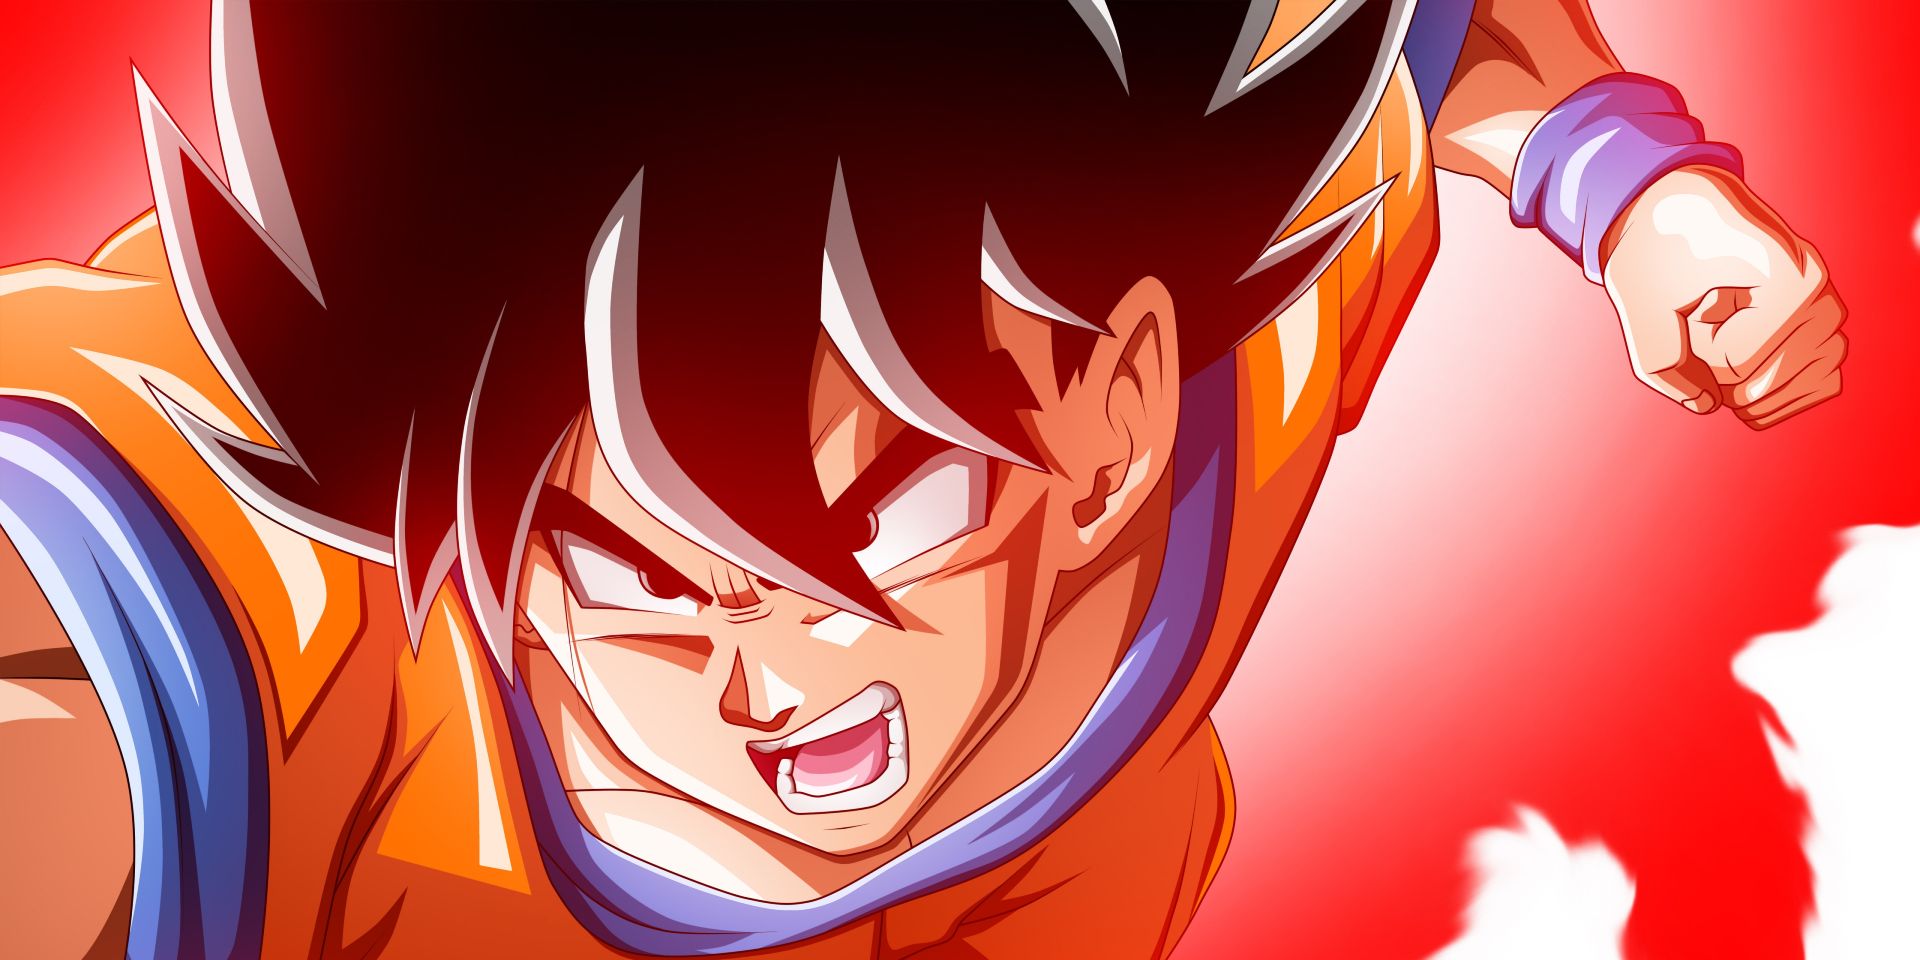 Goku from the shonen anime series Dragon Ball.